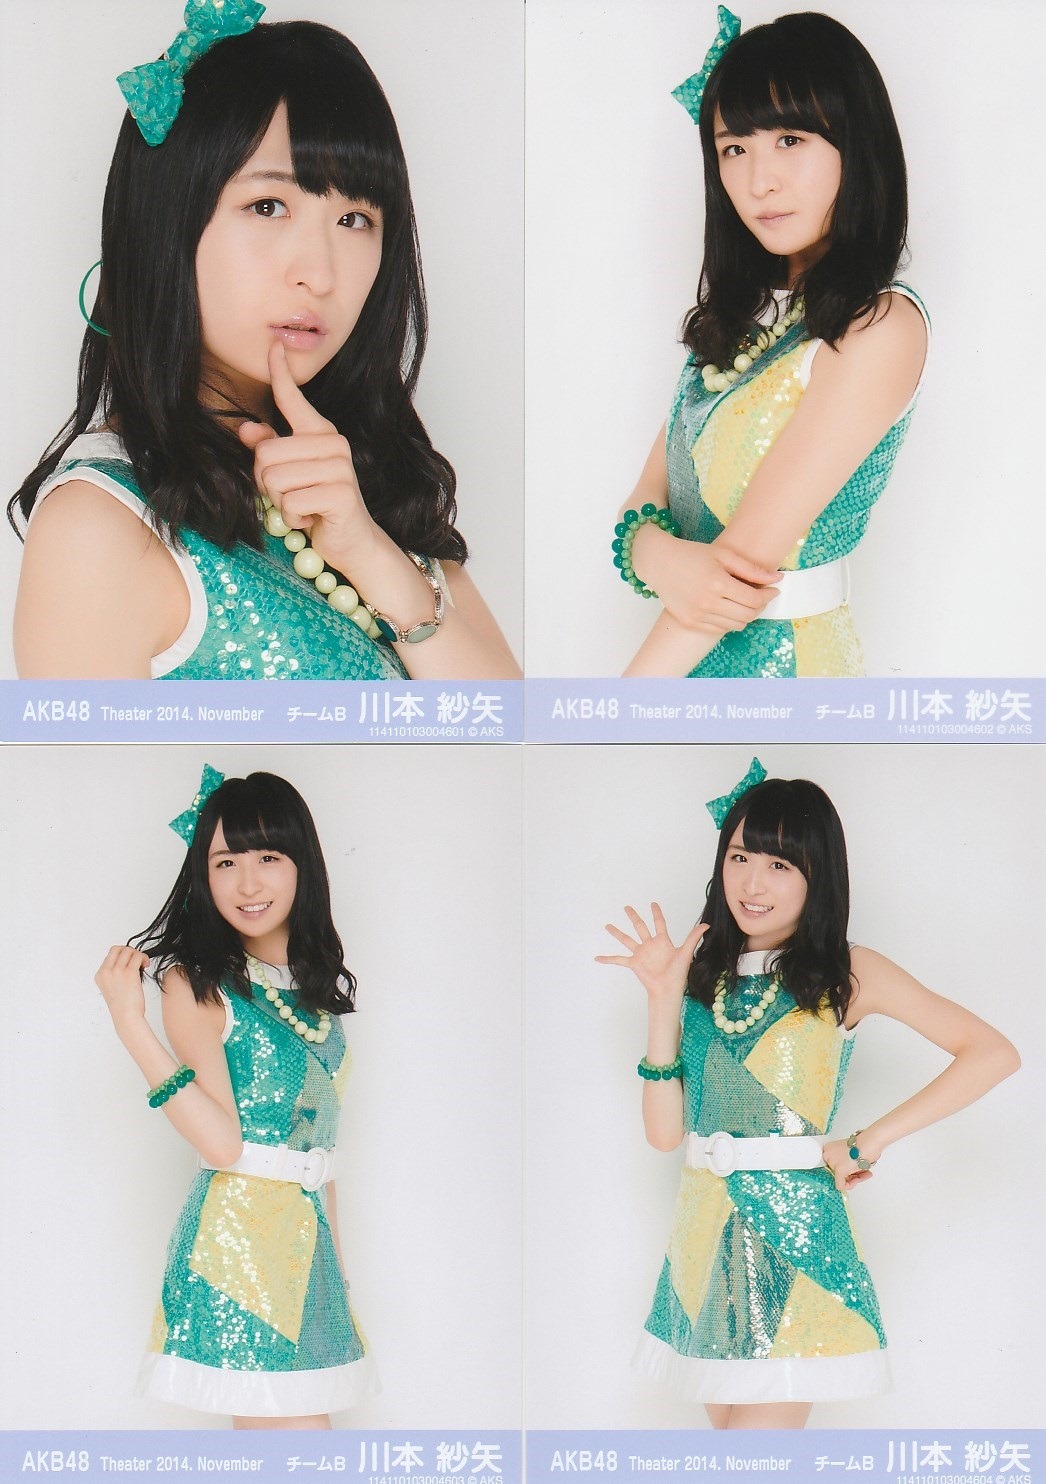 AKB48 Theater Photos | November 2014